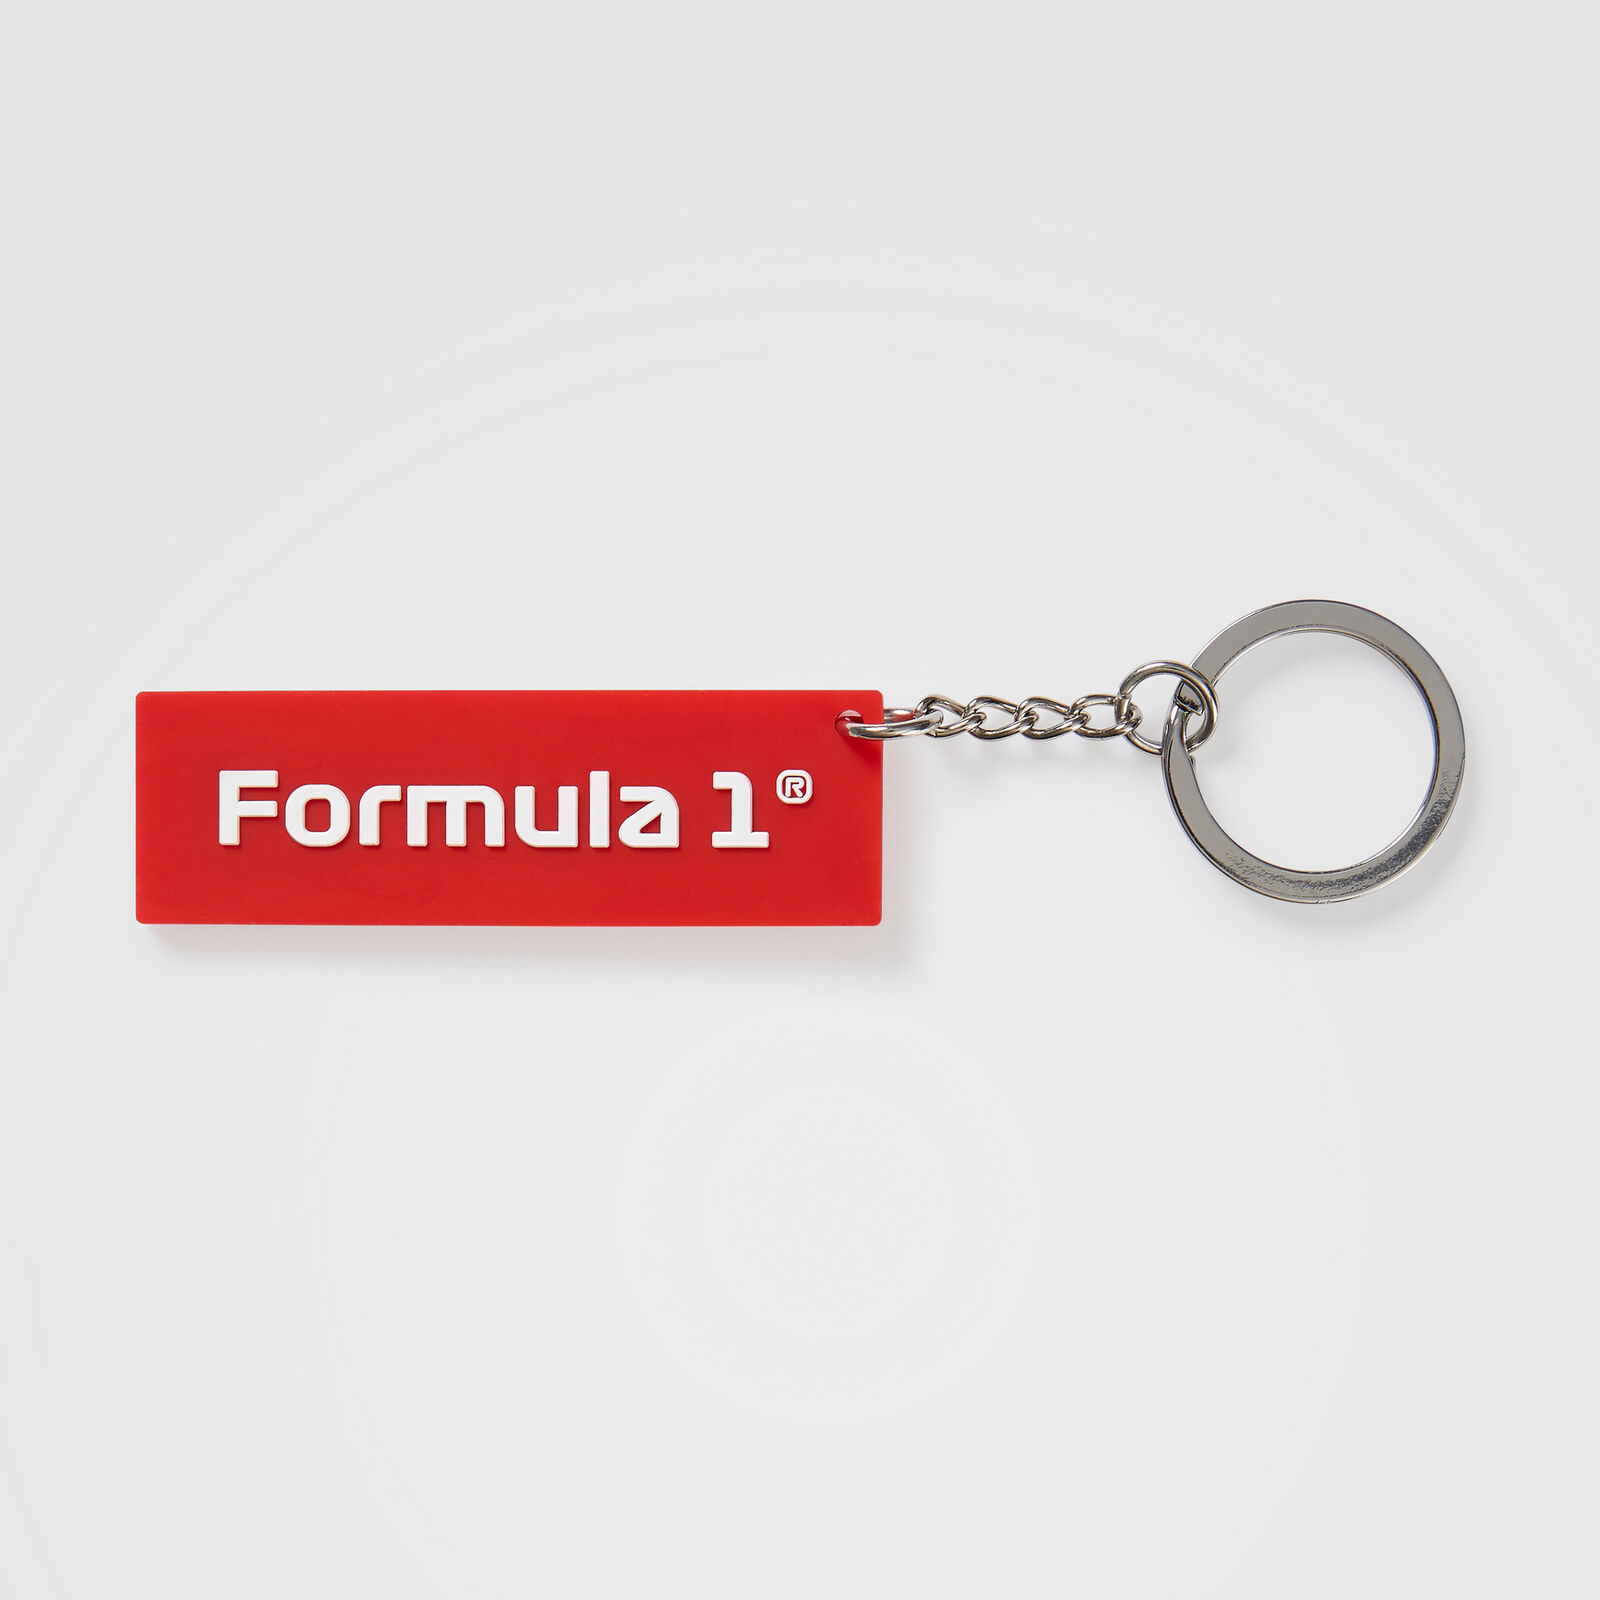 Porte-clés avec logo F1